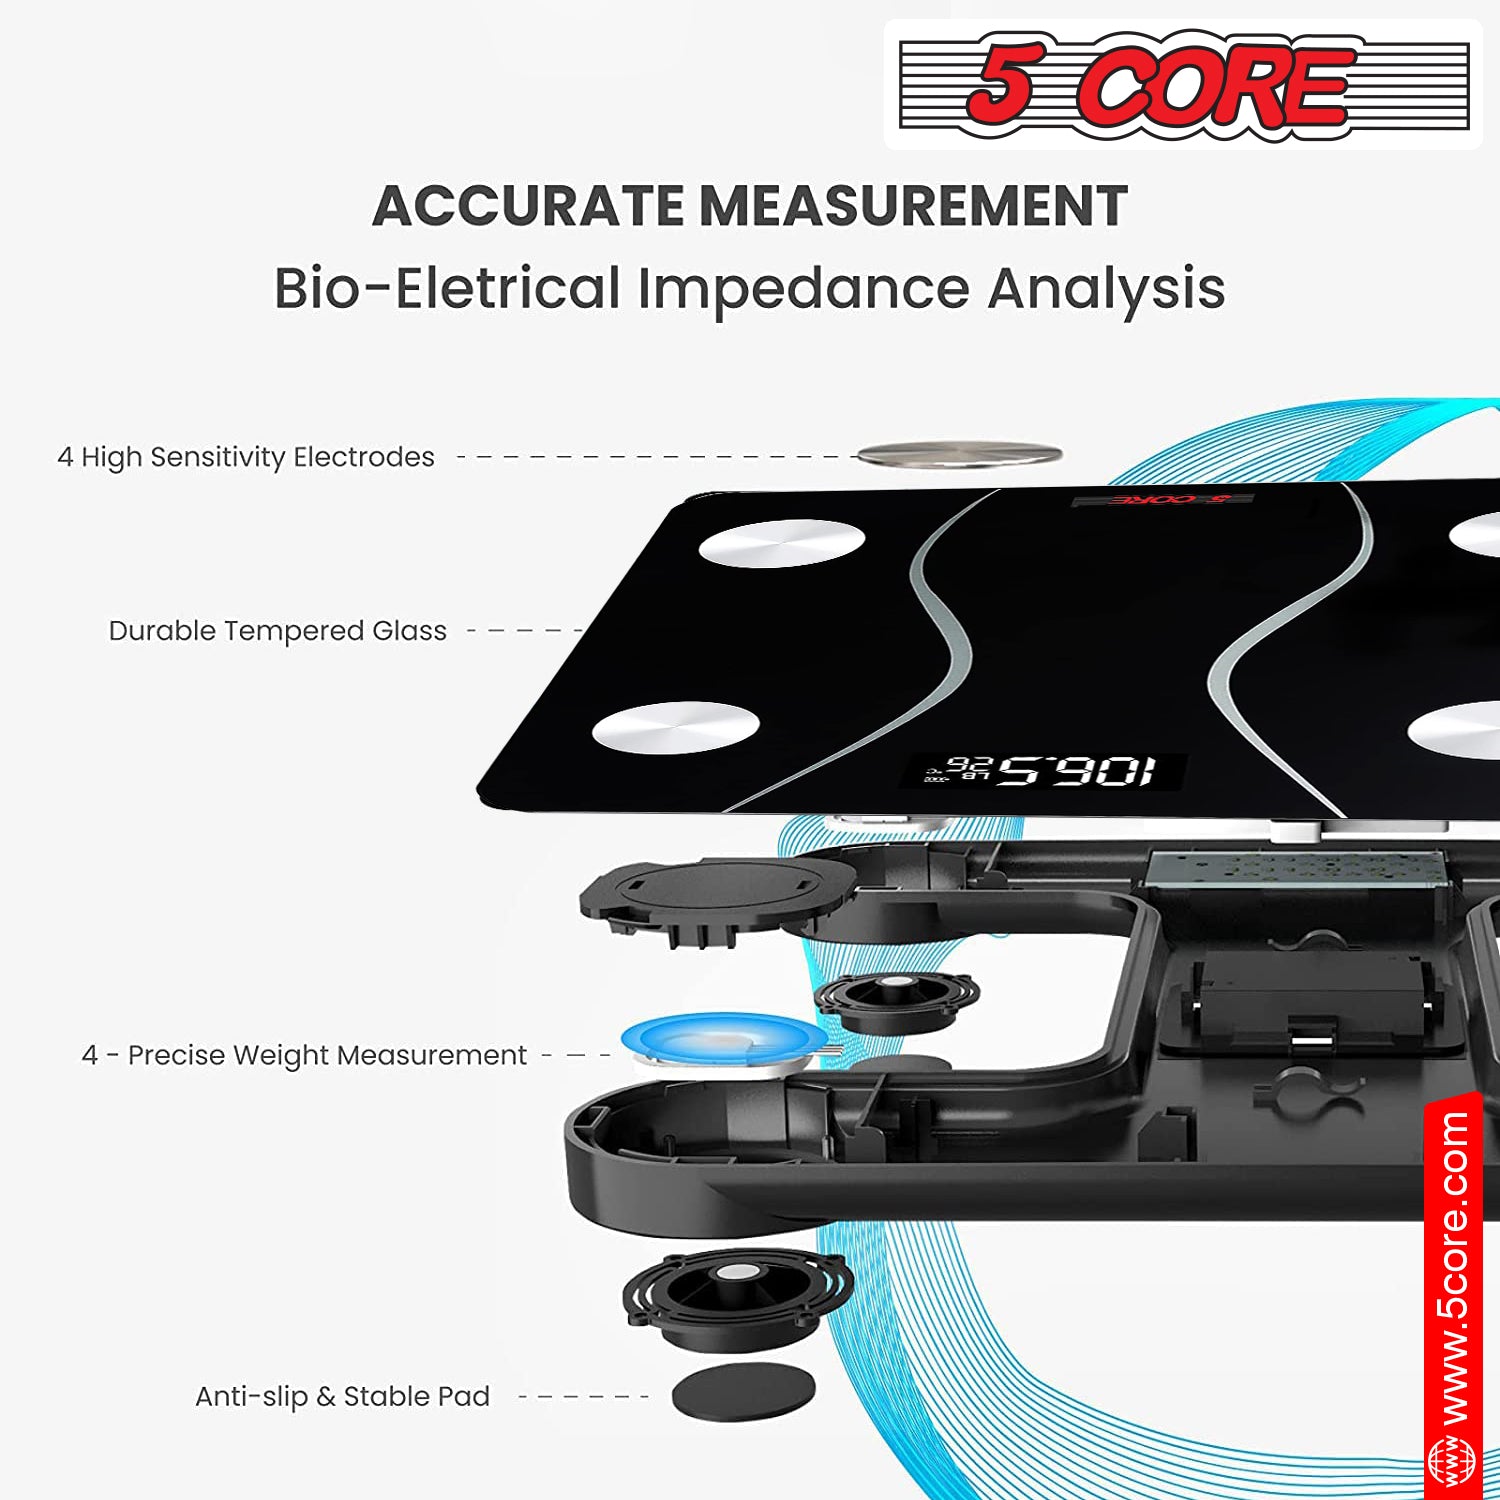 Sleek Black 5 Core Digital Bathroom Scale for Accurate Body Weight Measurement